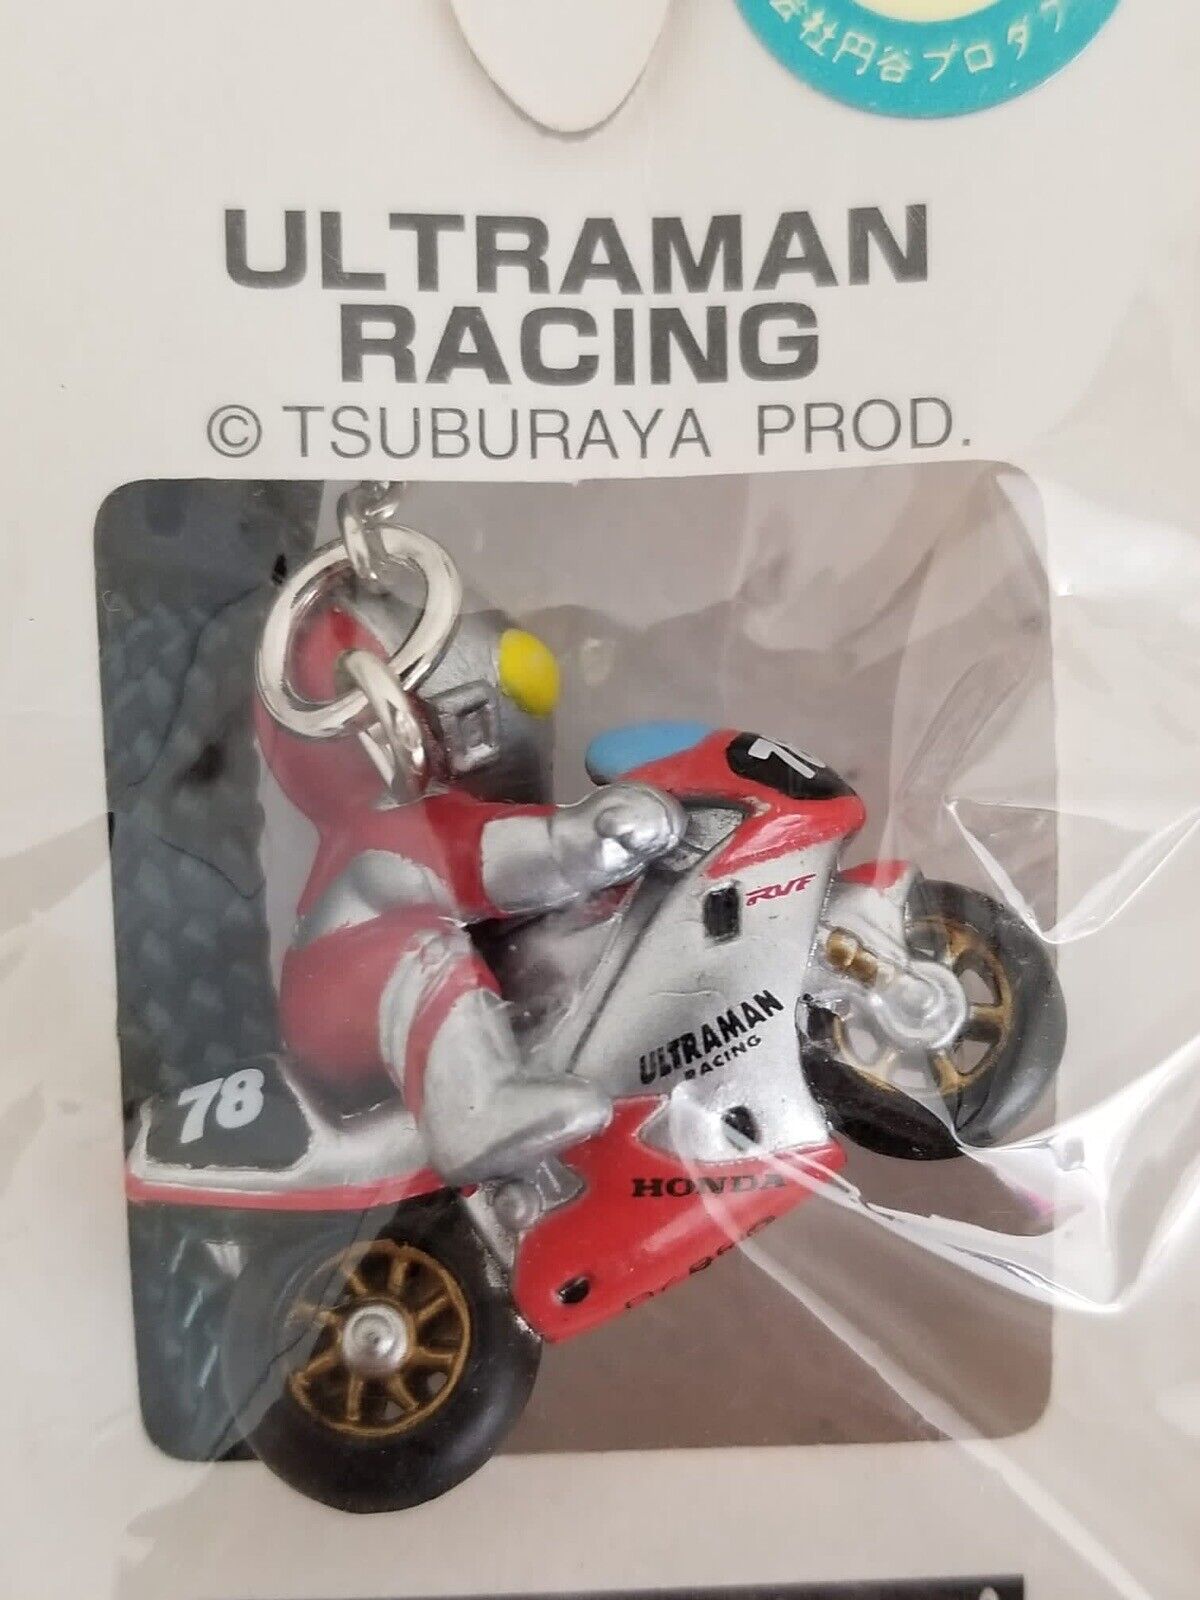 Rare Vintage Ultraman Racing Mascot Straps - Exclusive Japan Sealed Collectible Lot (3 Items) - TreasuTiques